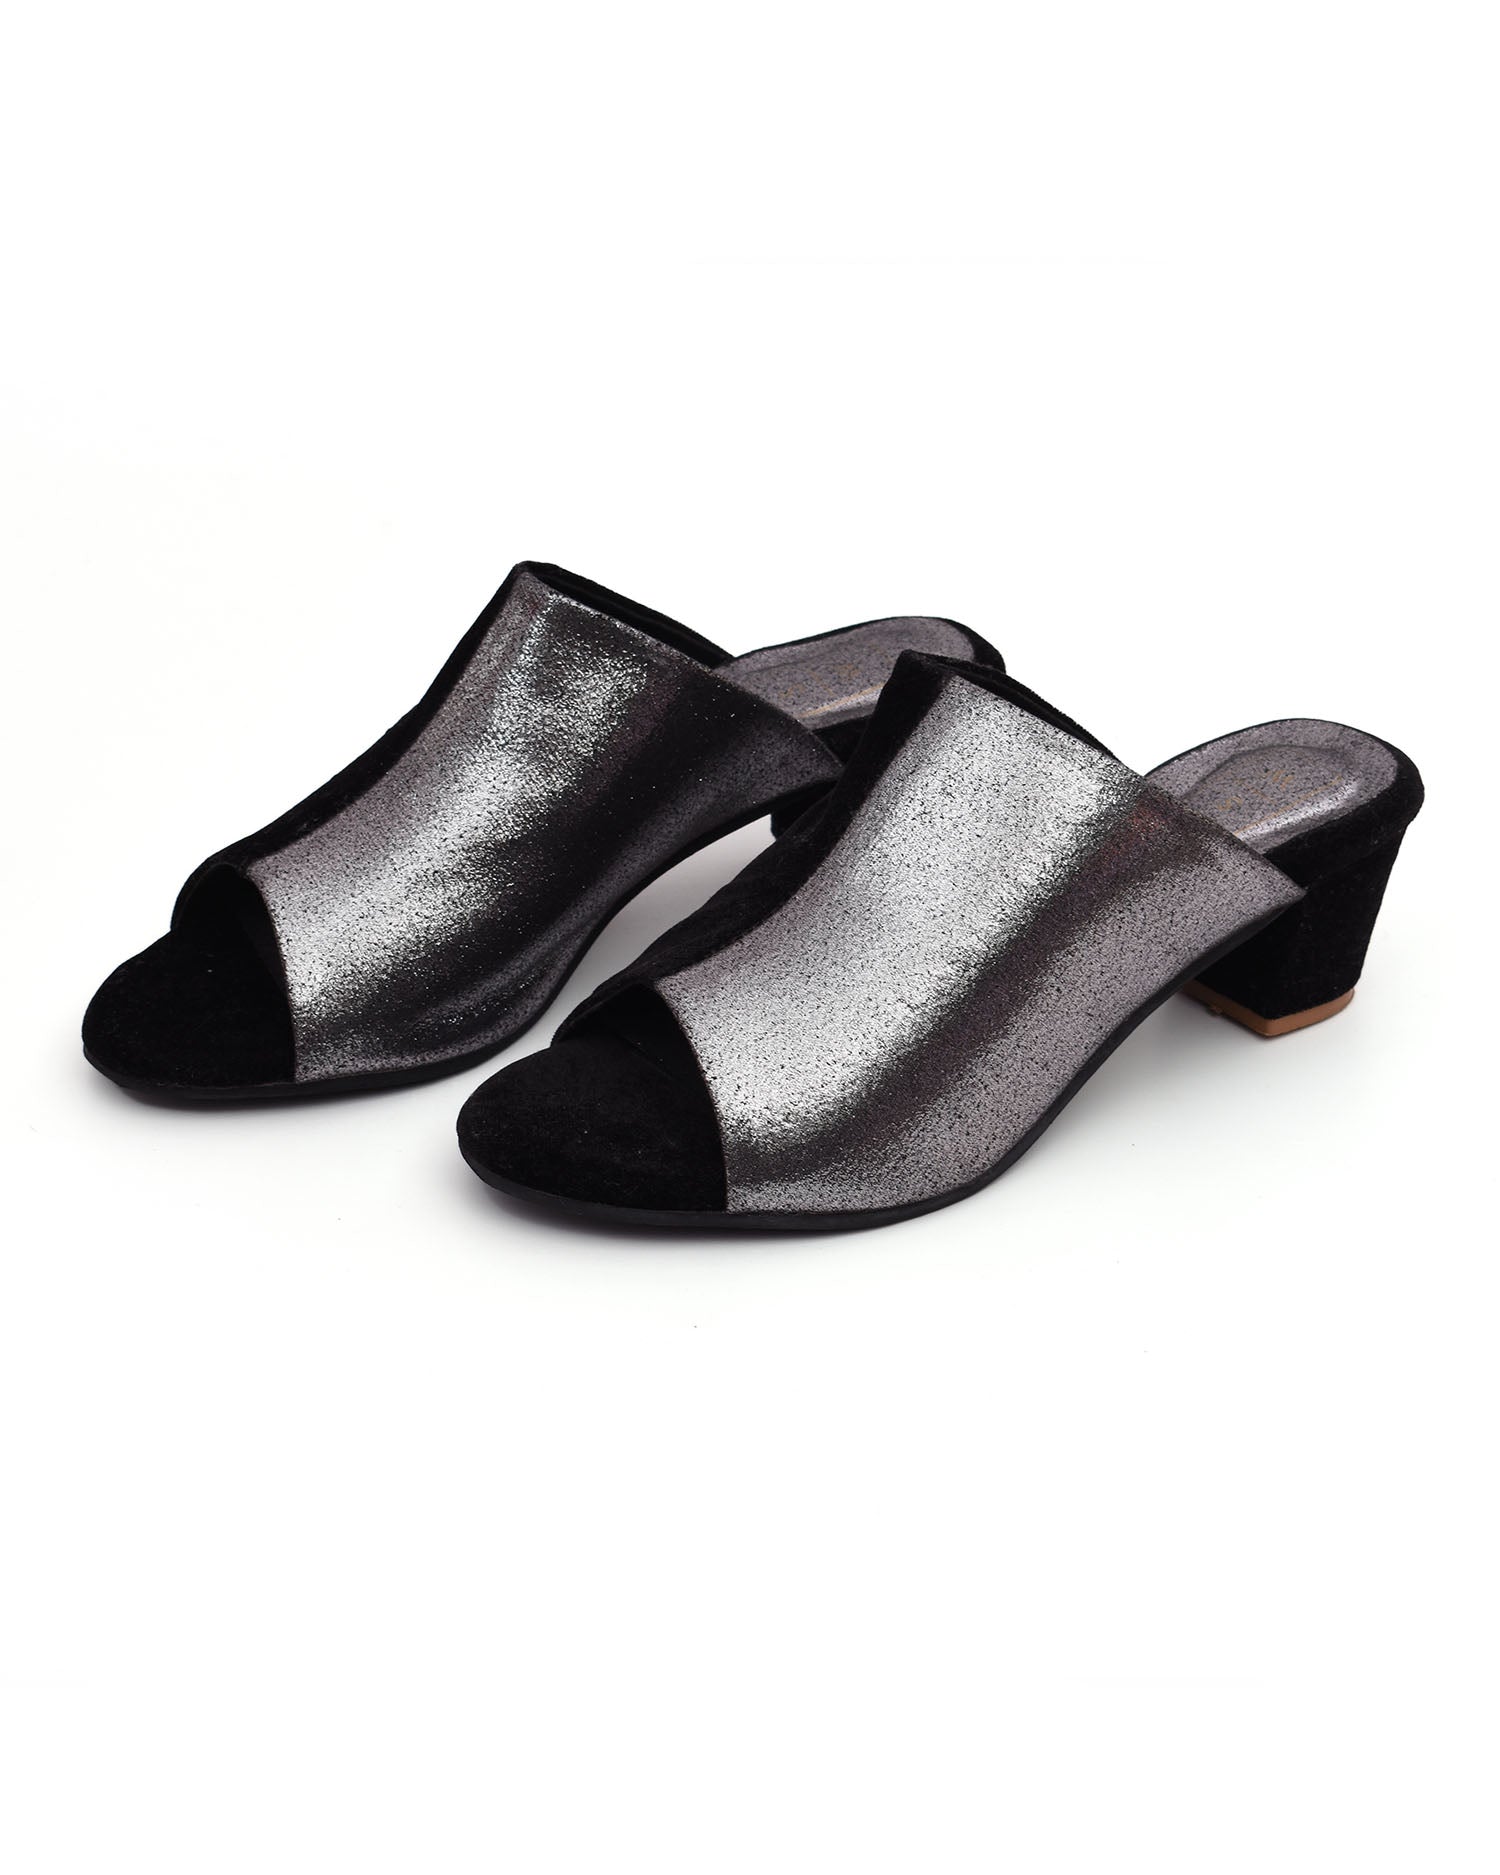 Lyla Black & Silver Heel Sandals